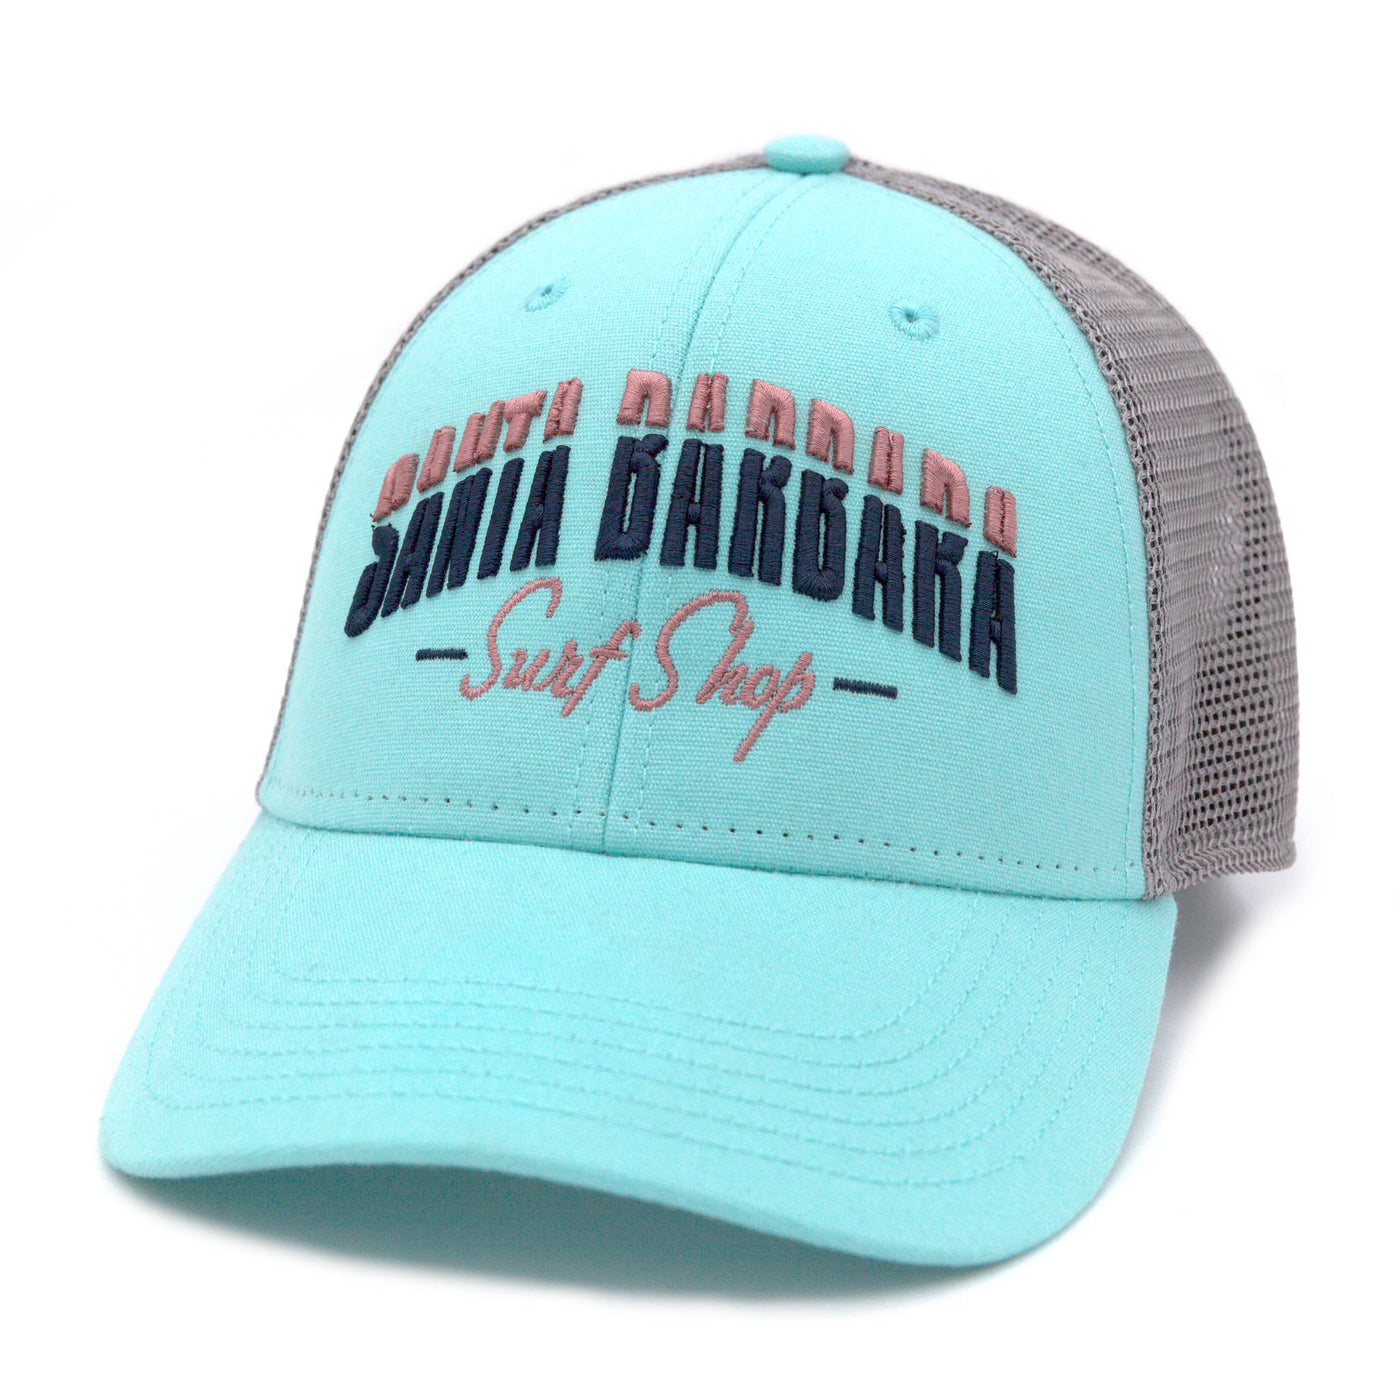 Santa Barbara Surf Shop Two Tone Vacation Trucker Hat